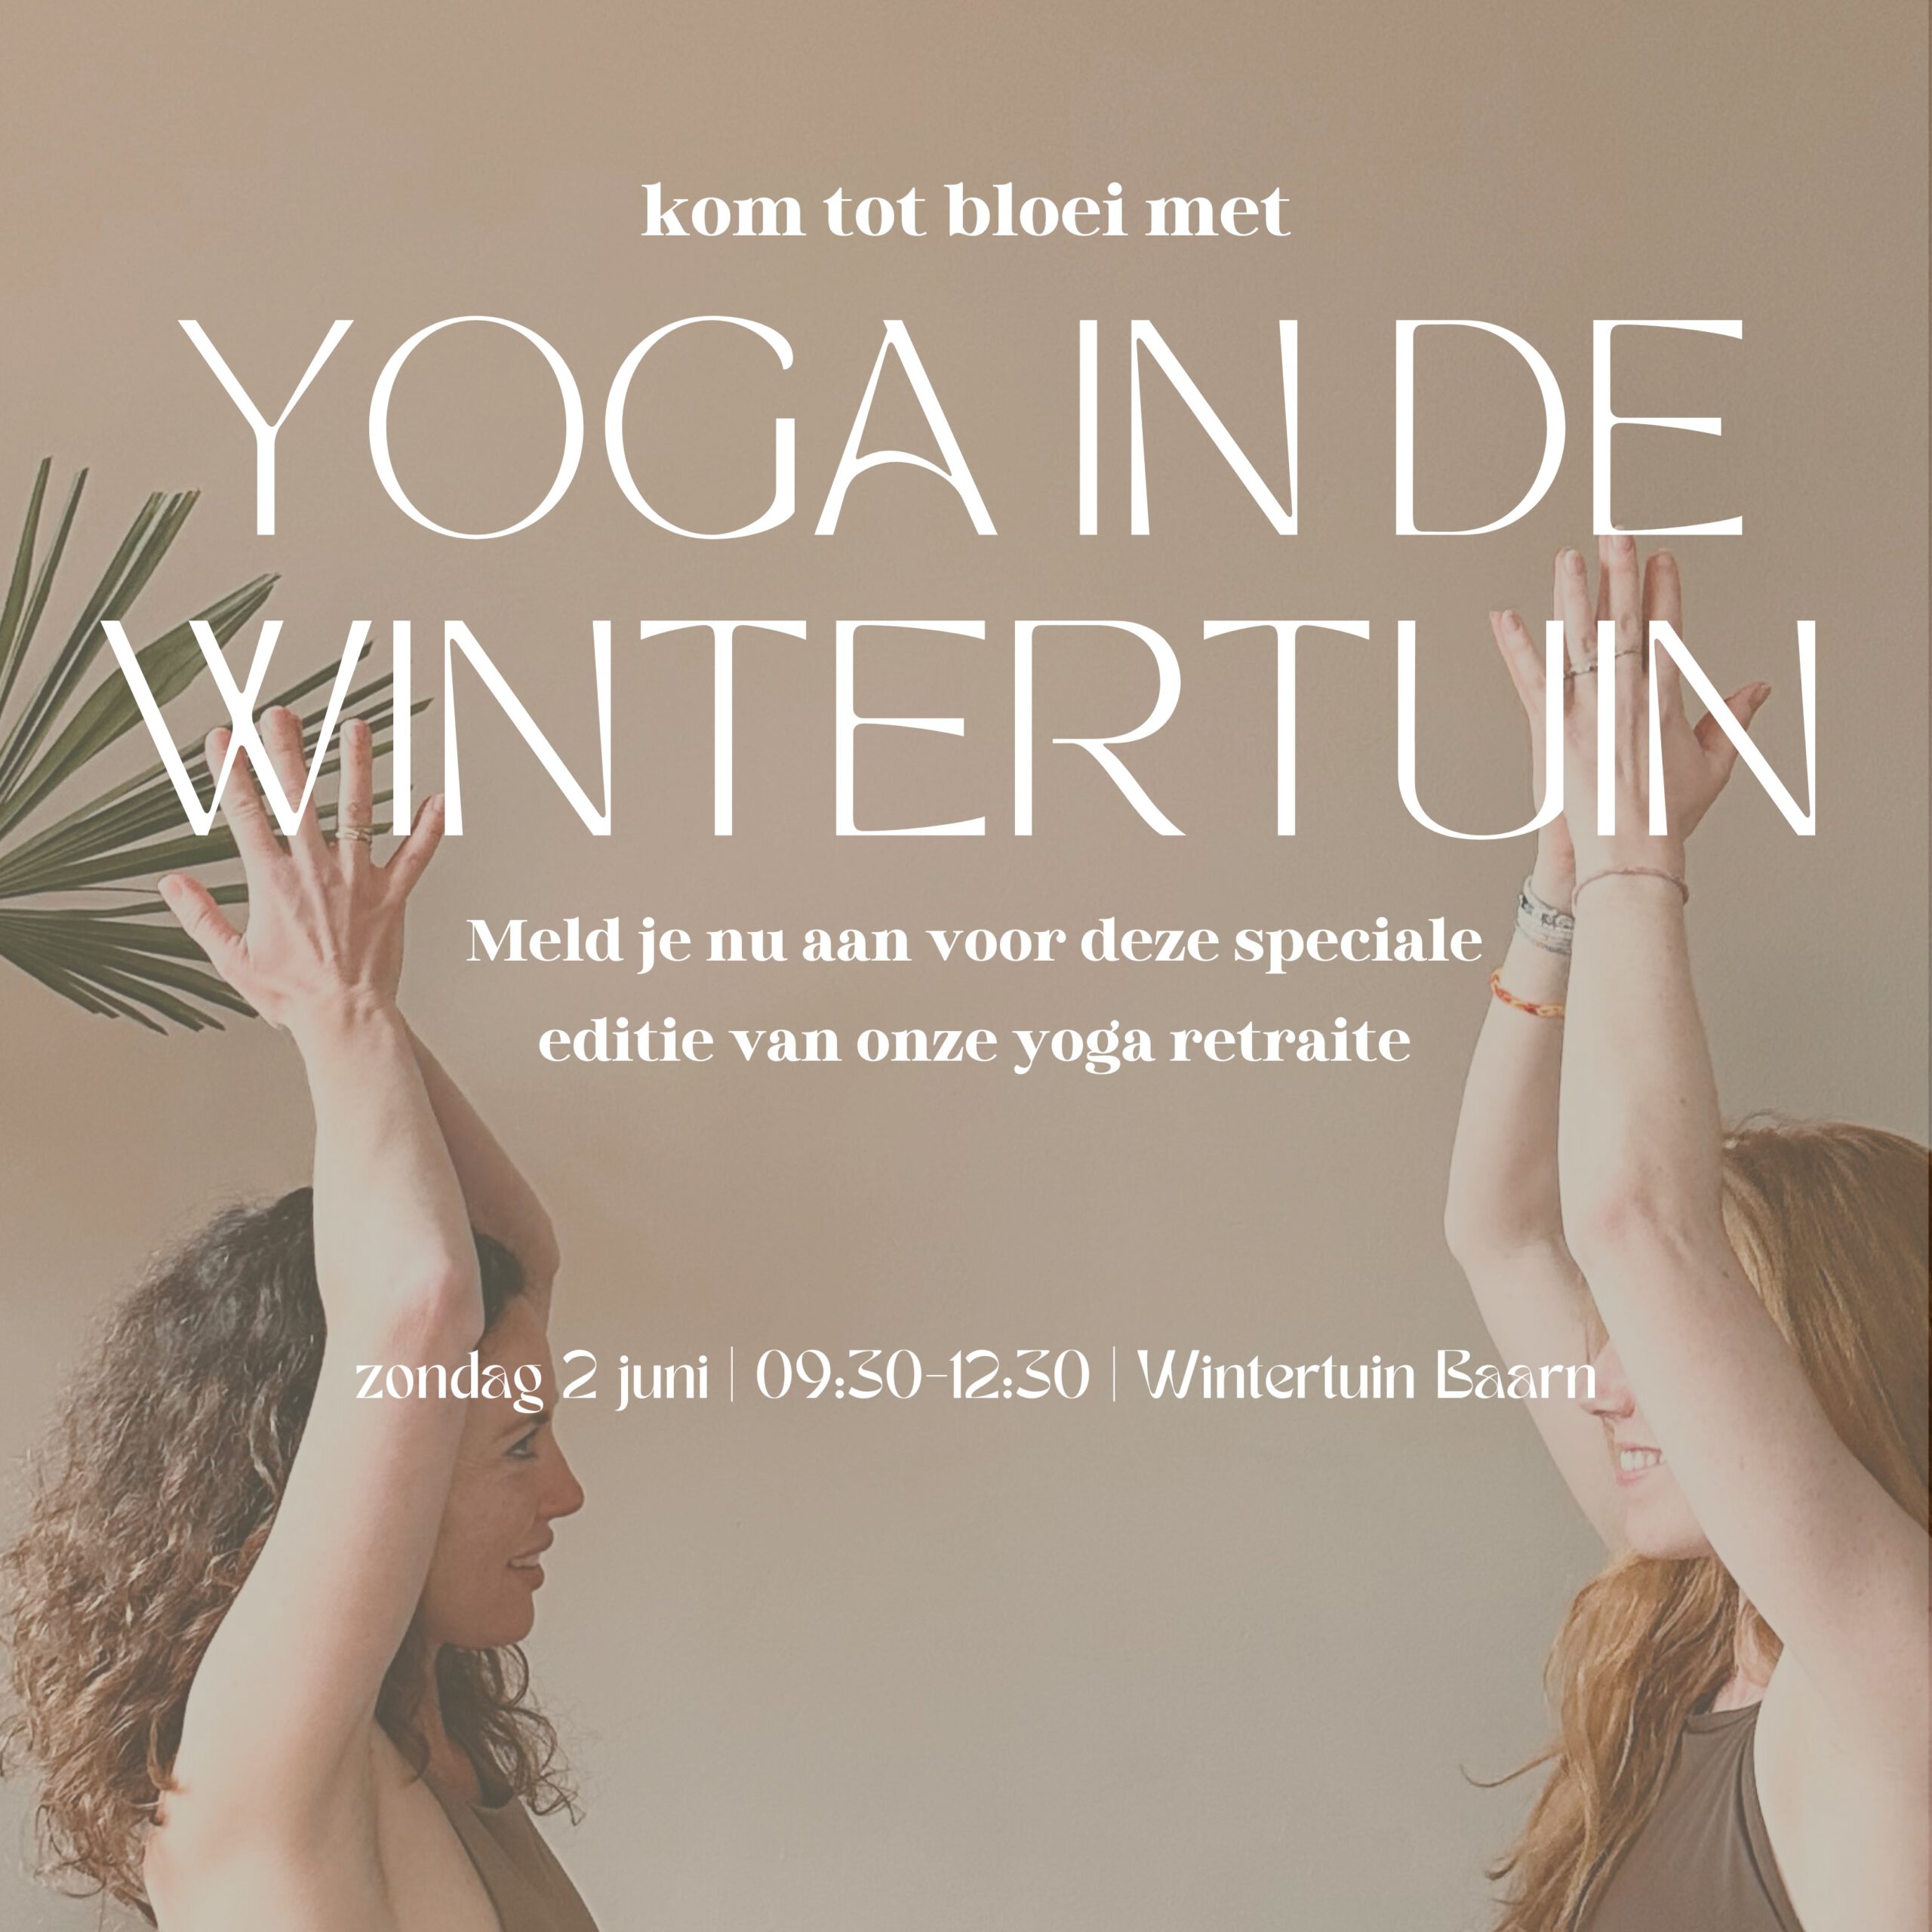 Yoga in De Wintertuin in Baarn